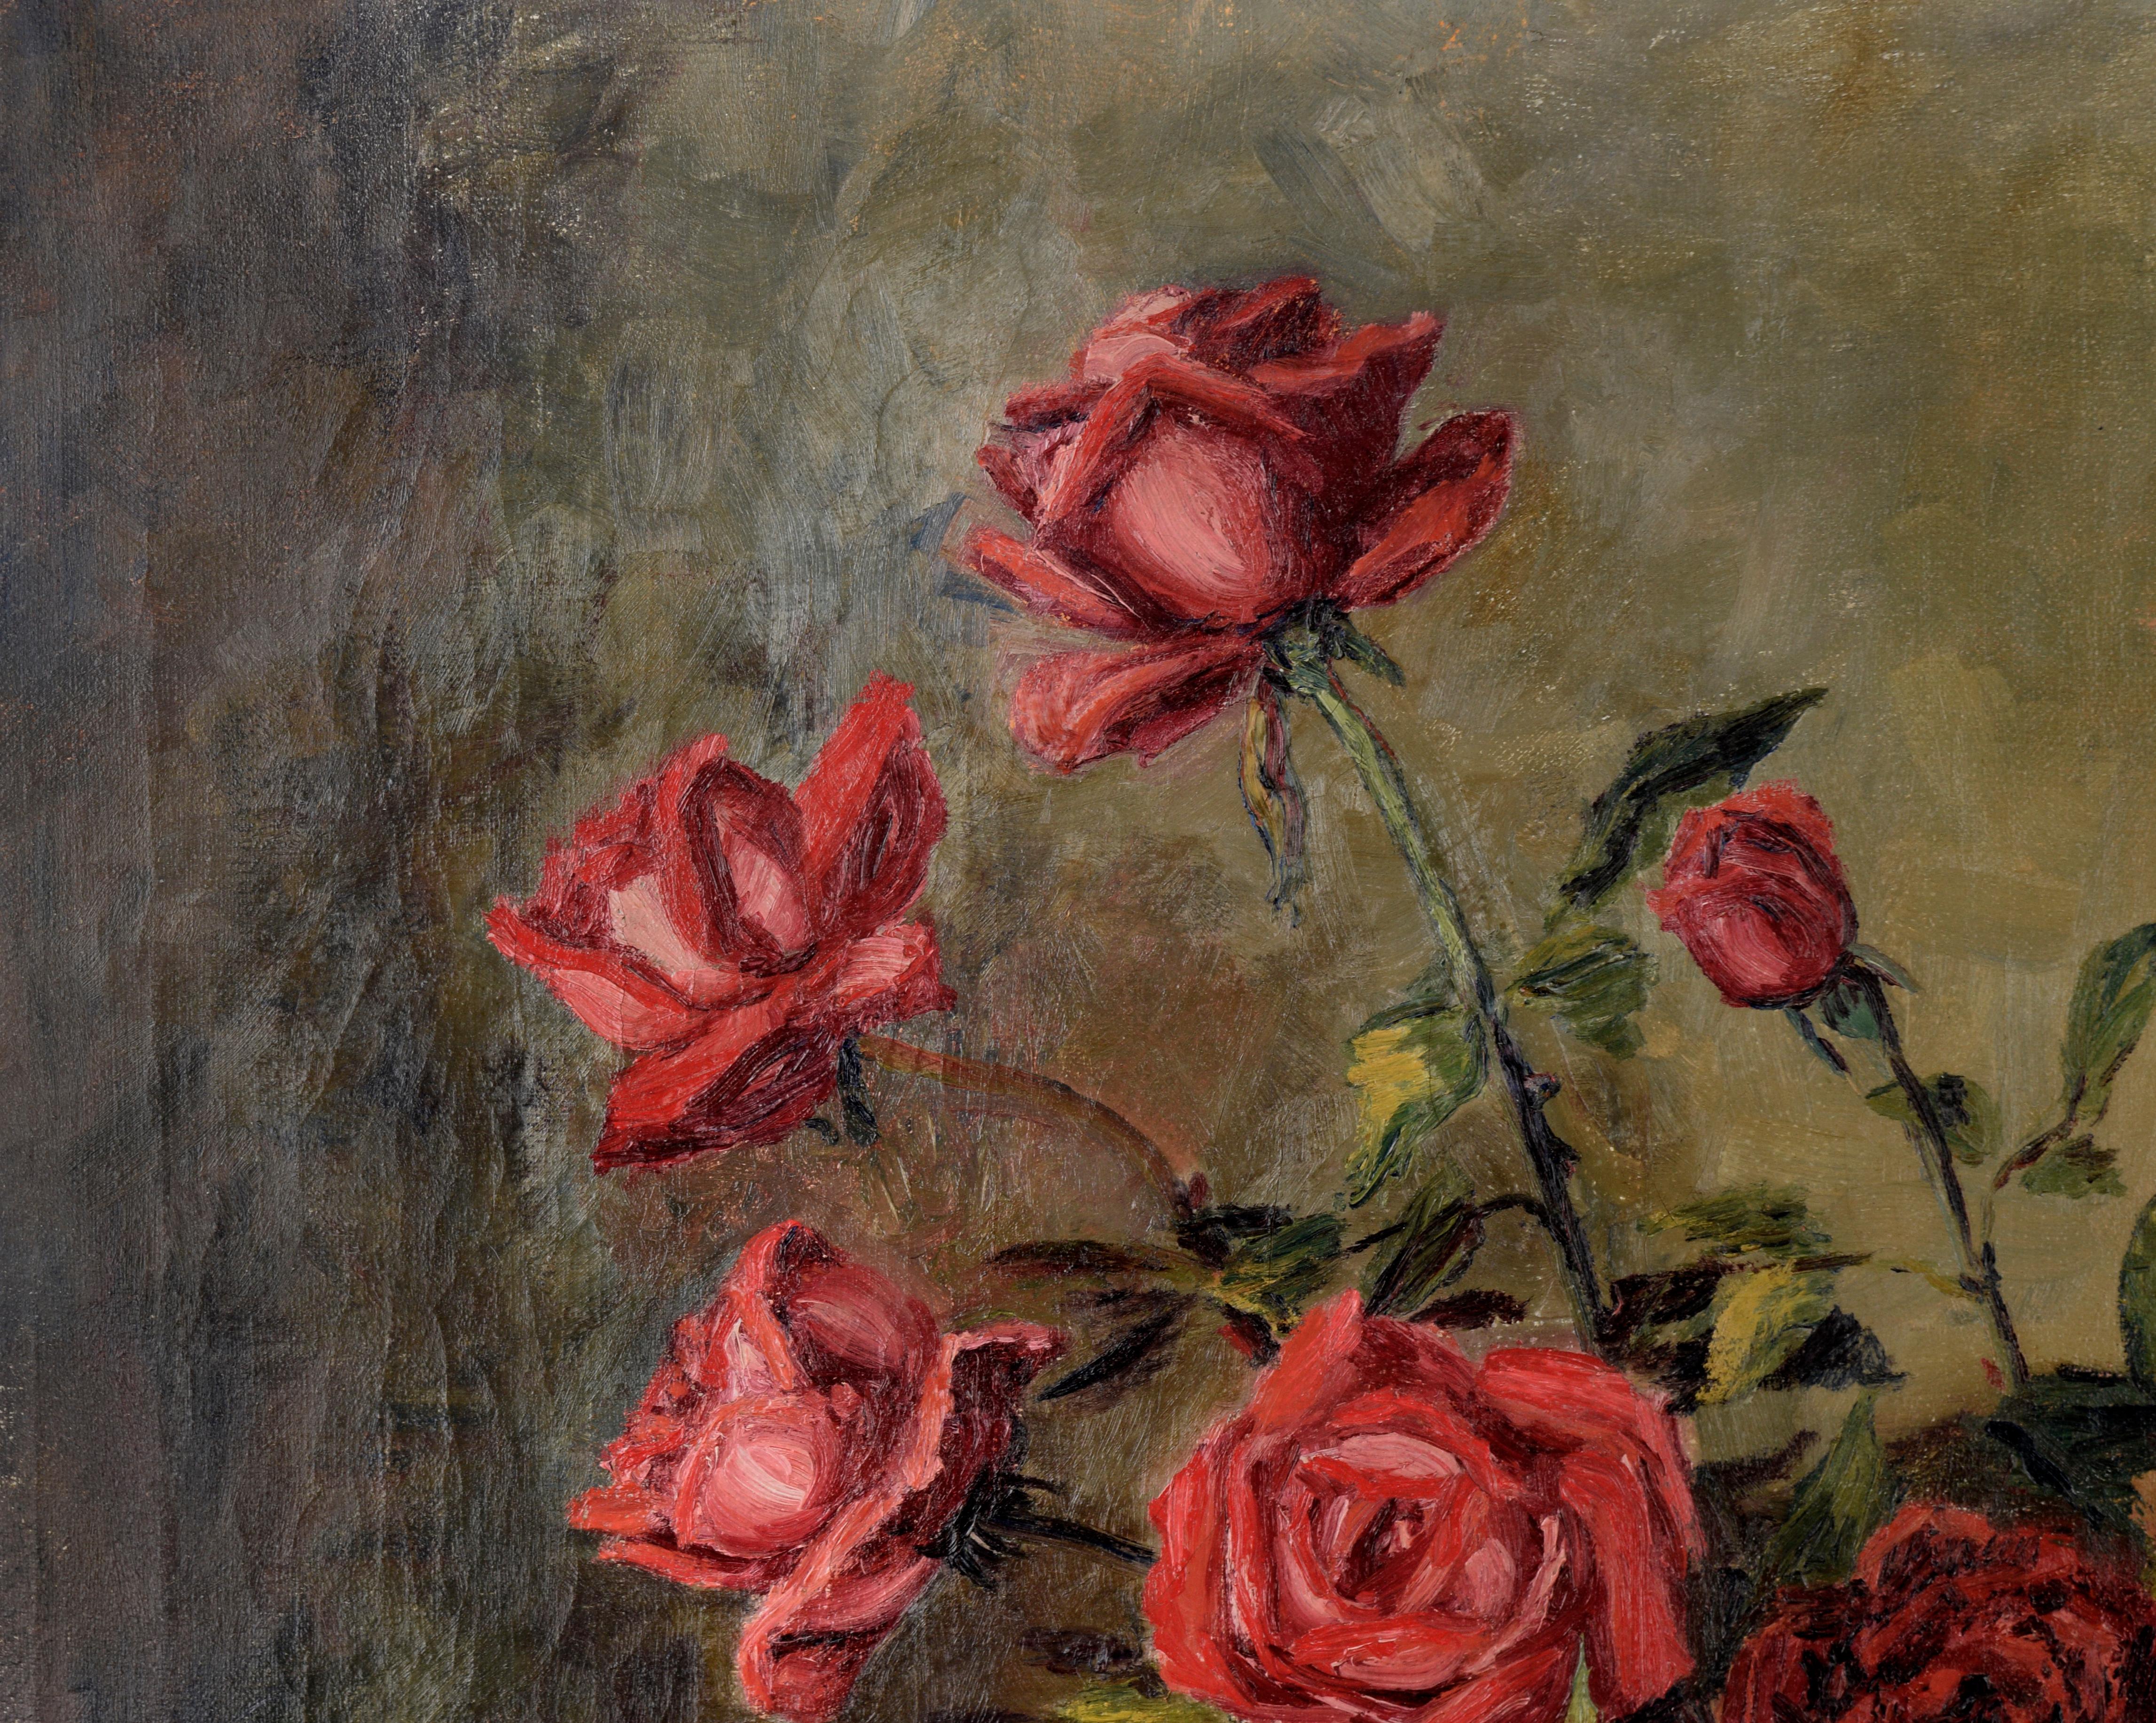 Les Pirates of Penzance - Roses et natures mortes de Willie Kay Fall - Texas  - Impressionnisme américain Painting par Willa Kay Fall 